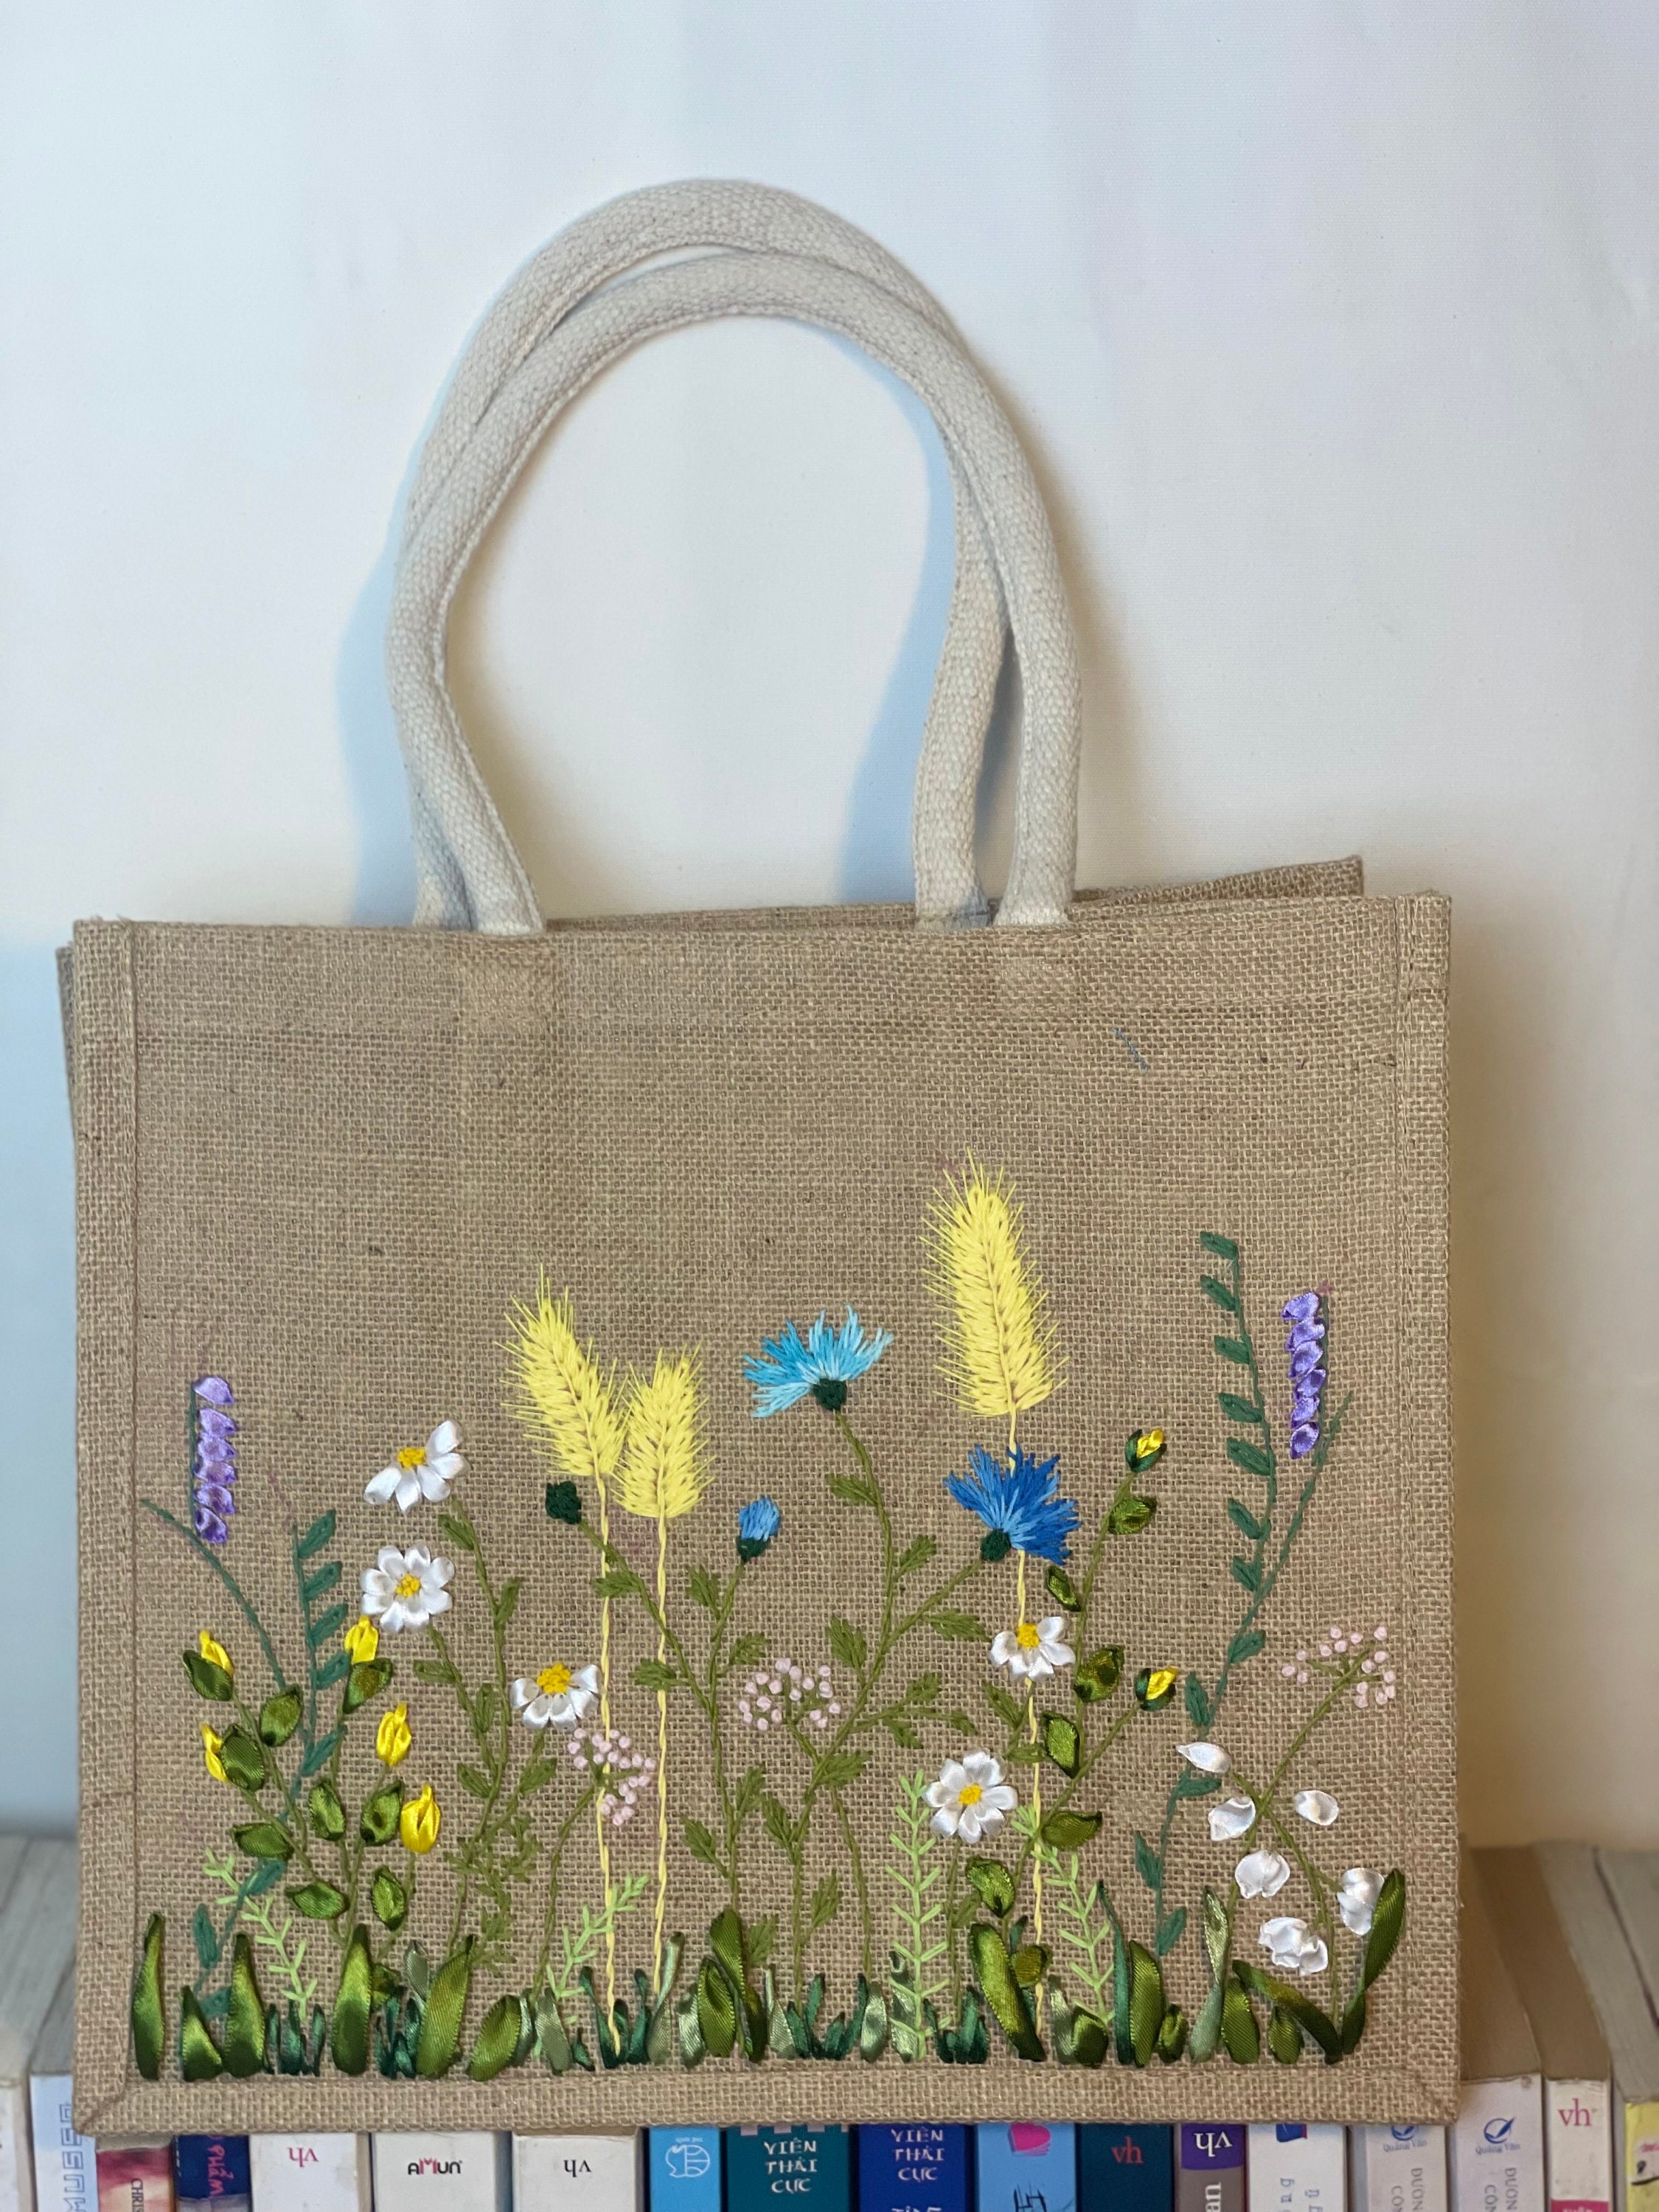 Rustic elegant Jute Bag, Birthday gifts bags, Gift Favor jute bags – JO  SEASONS CRAFTS